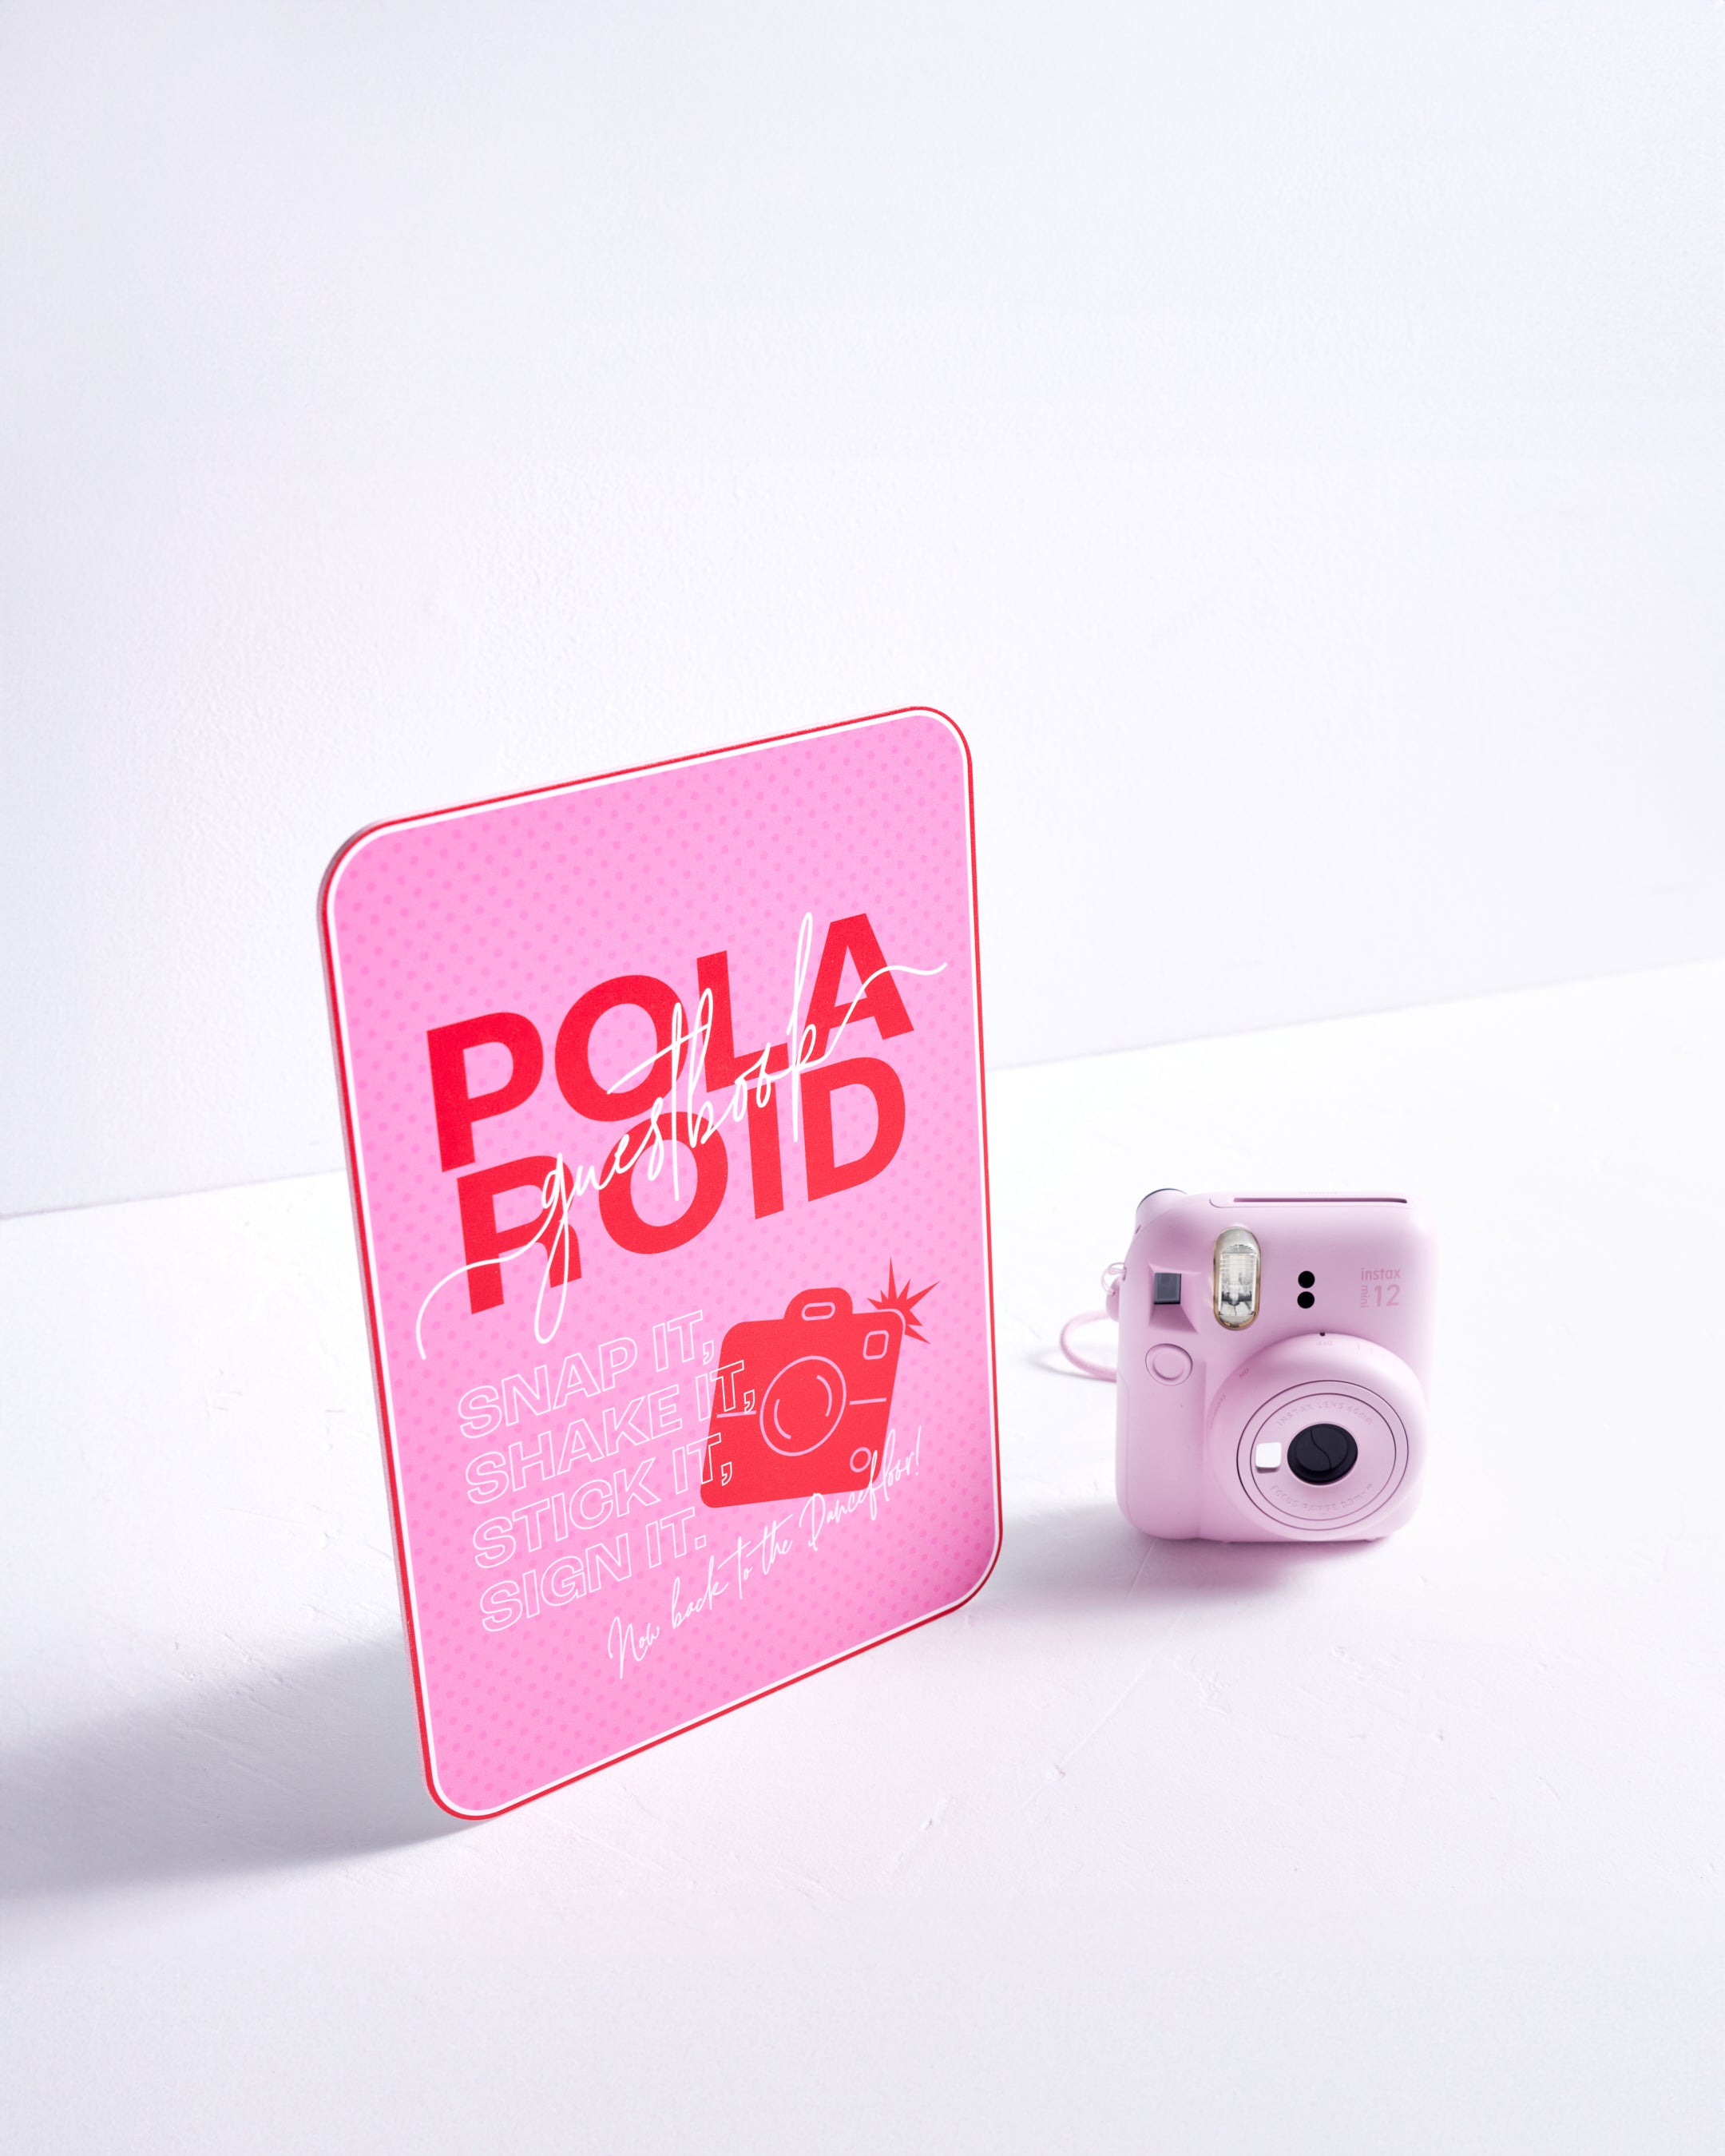 Polka Polaroid Guestbook Sign